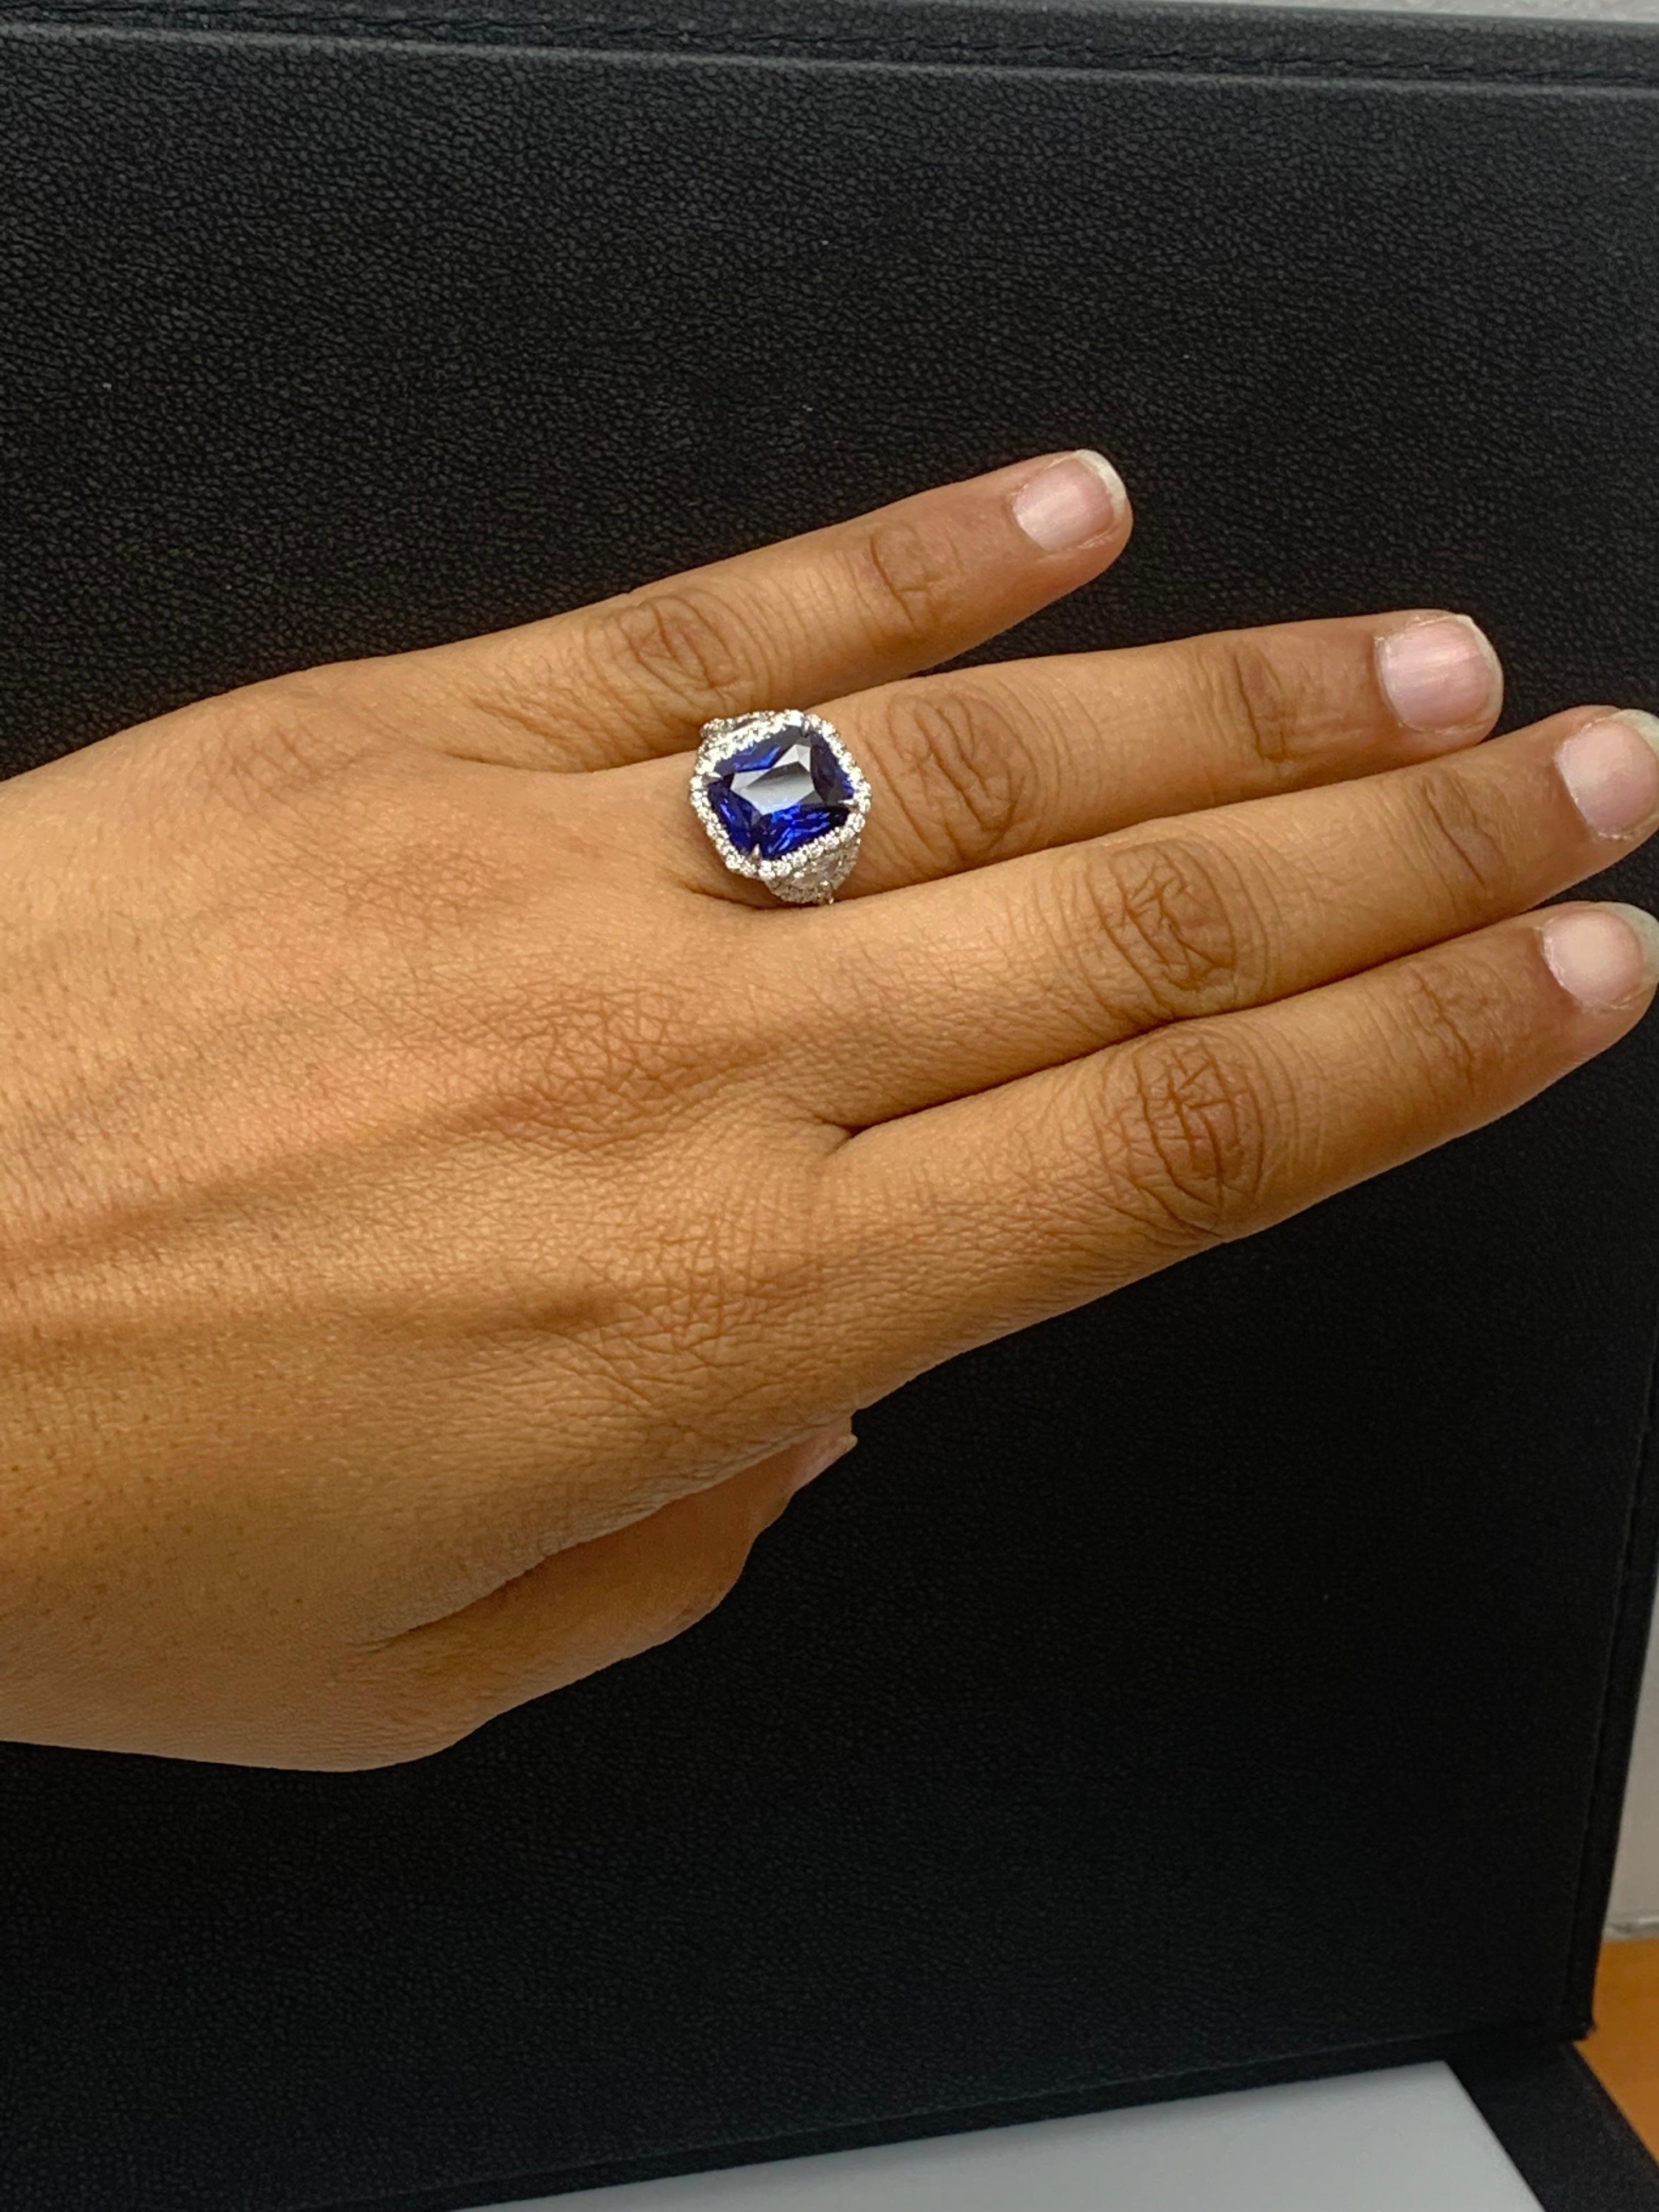 GIA Certified 4.41 Carat Emerald Cut Sapphire Diamond 3 Stone Ring in Platinum For Sale 5